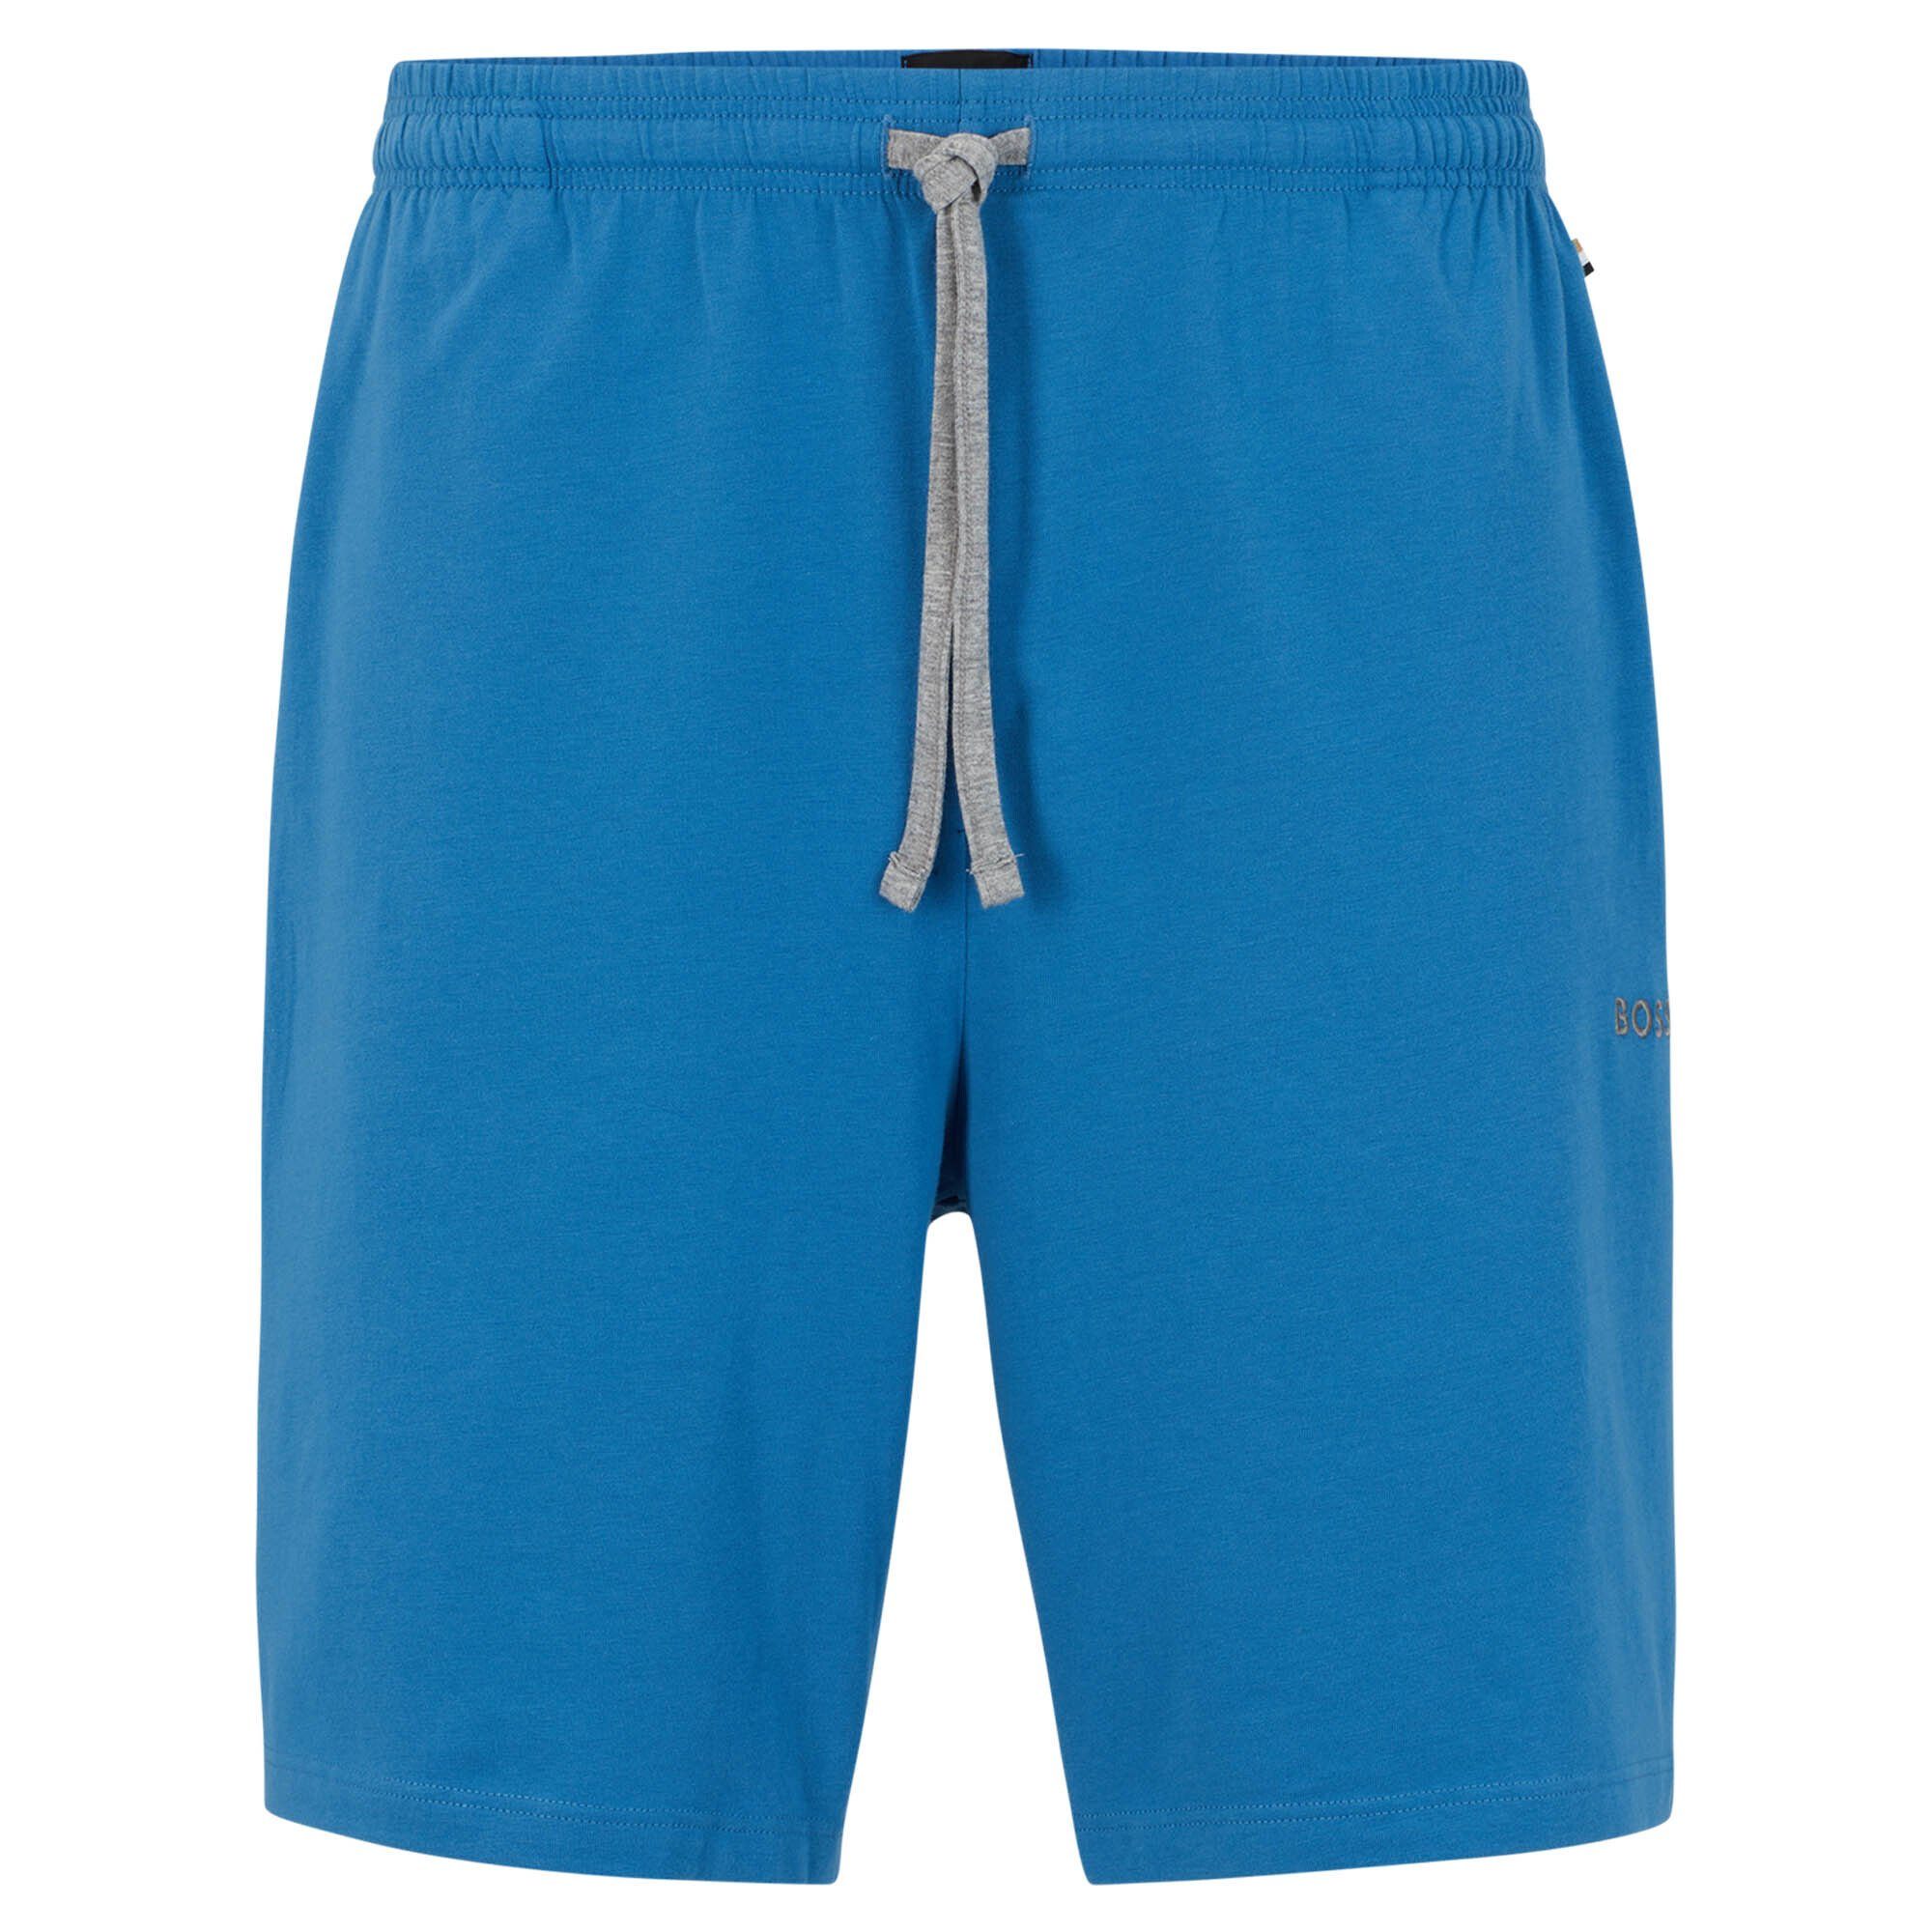 Herren Mittelblau BOSS Shorts Sweatshorts - Loungewear, Sweatshort Mix&Match,